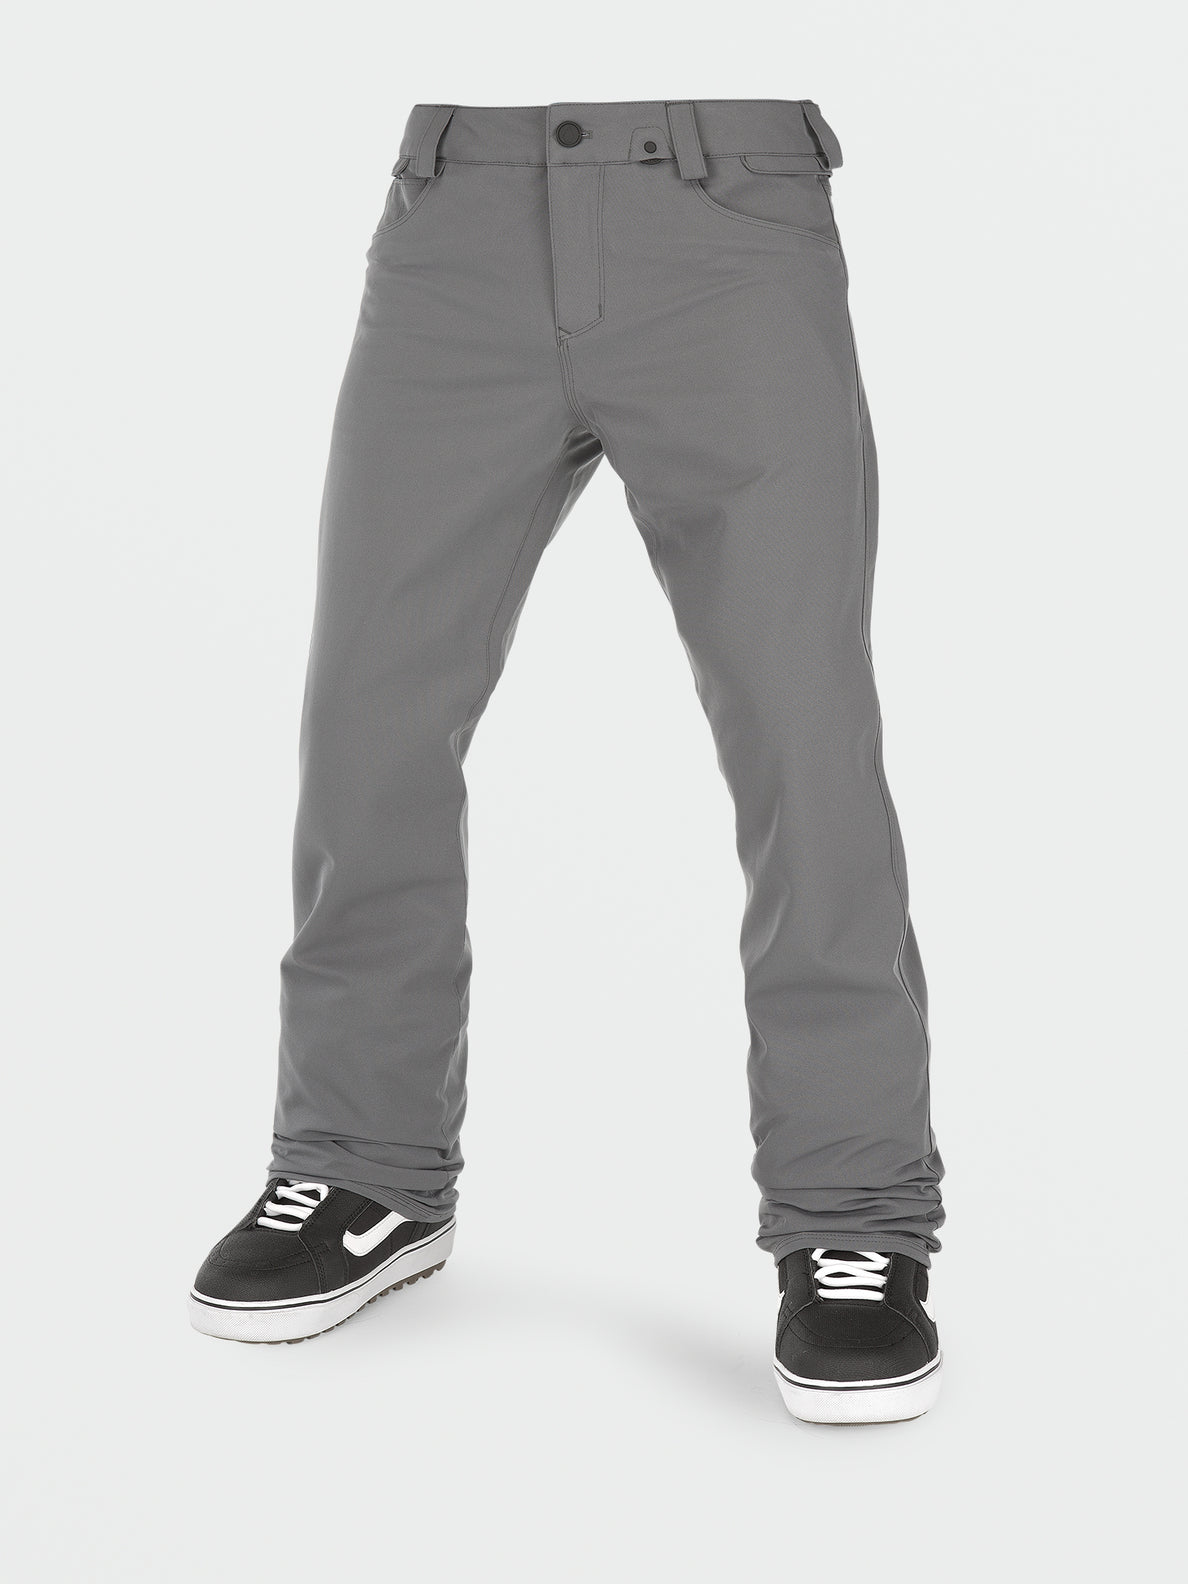 Men's 5-Pocket Tight Pant